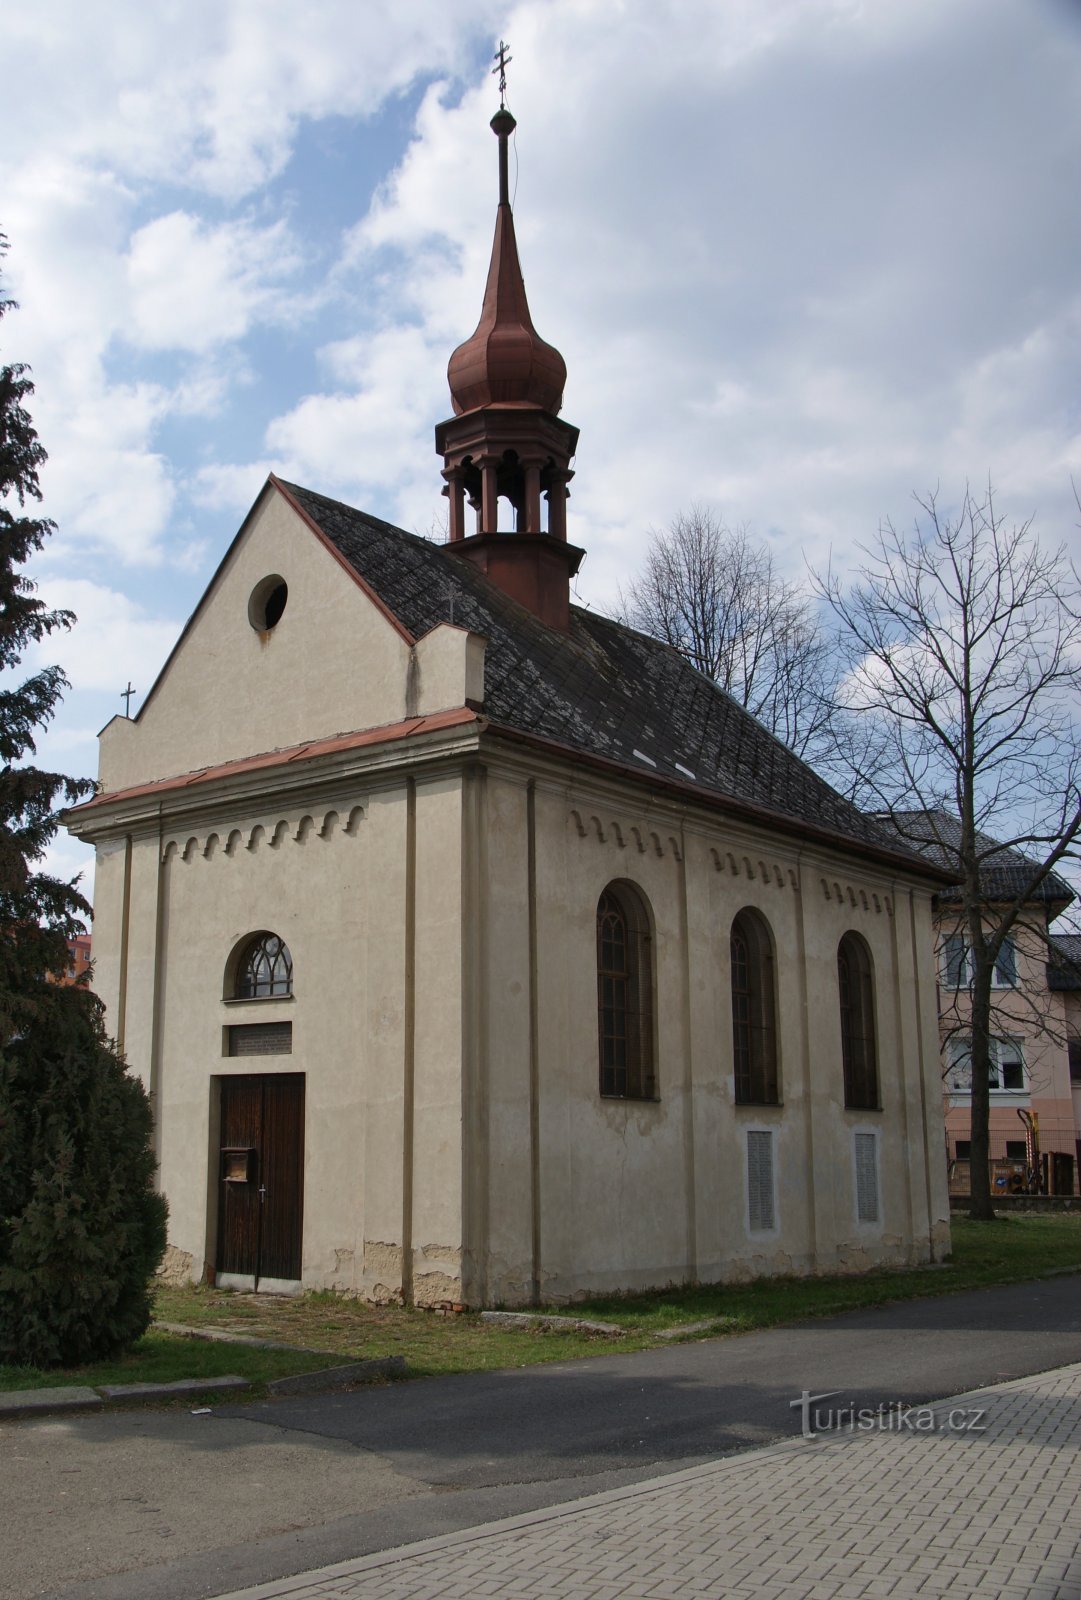 Dolní Temenice (Šumperk) - chapelle de la Sainte Famille